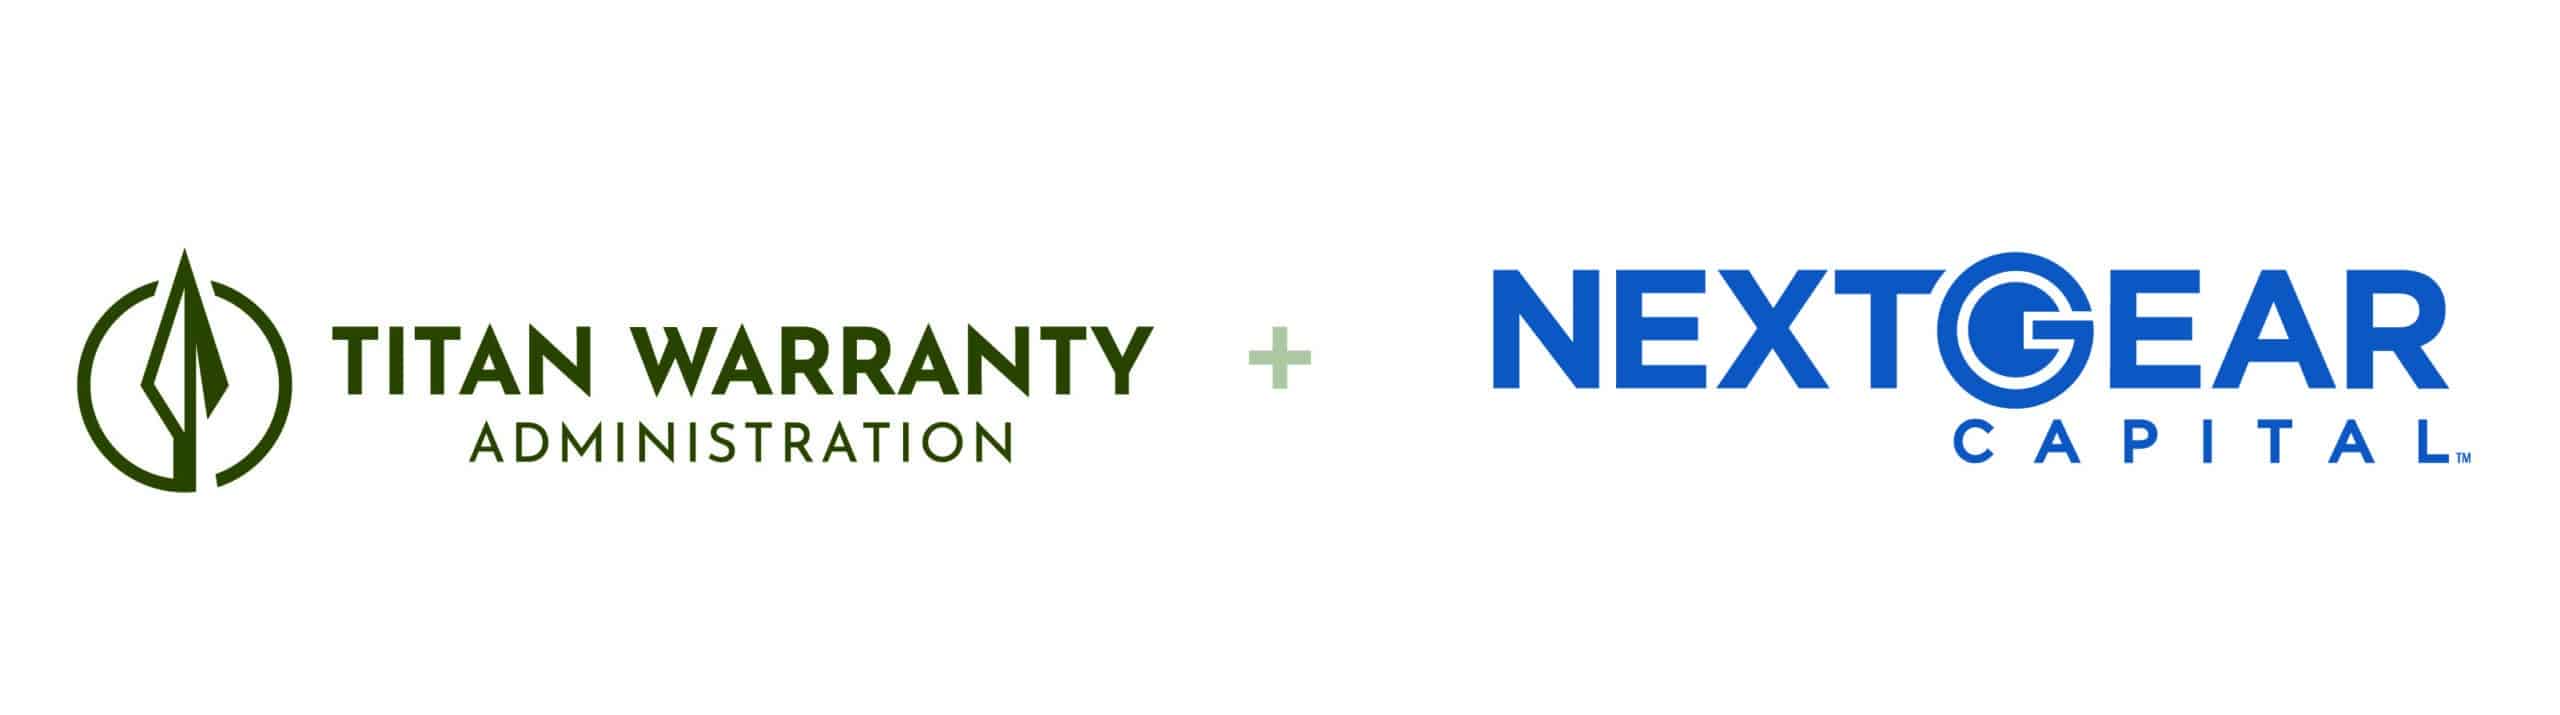 Titan Warranty Administration + NextGear Capital